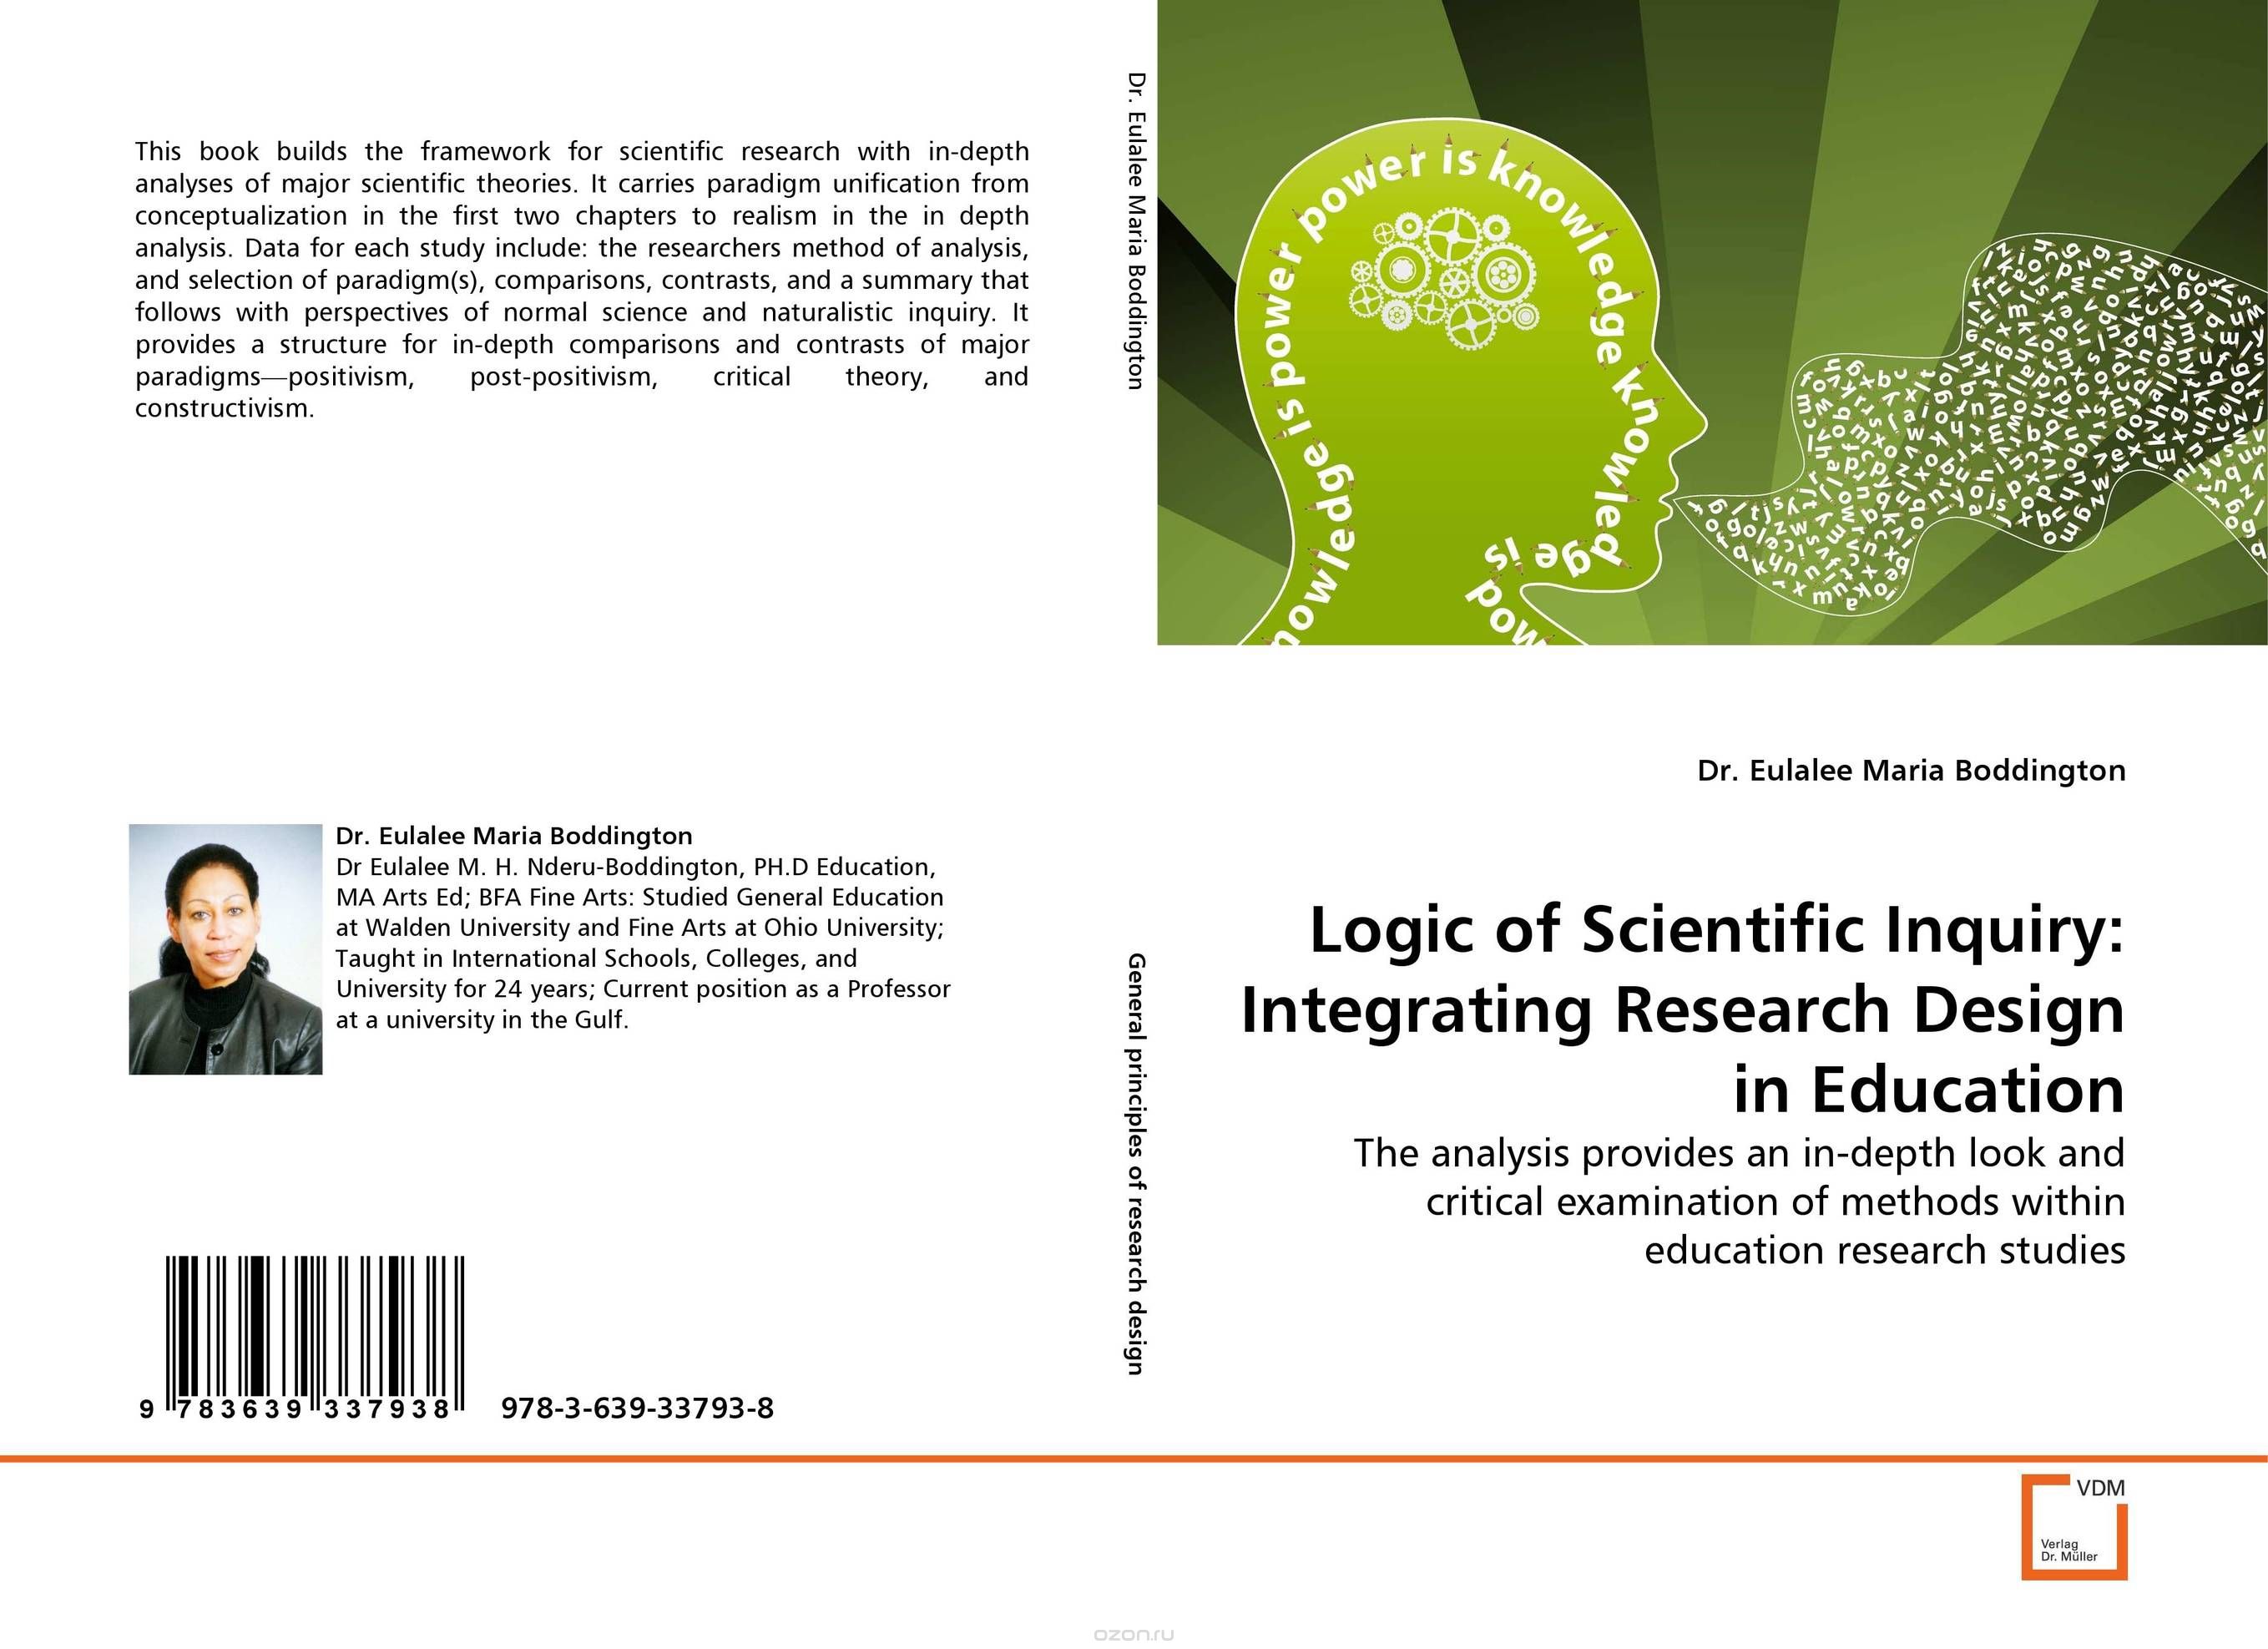 Logic of Scientific Inquiry: Integrating Research Design in Education